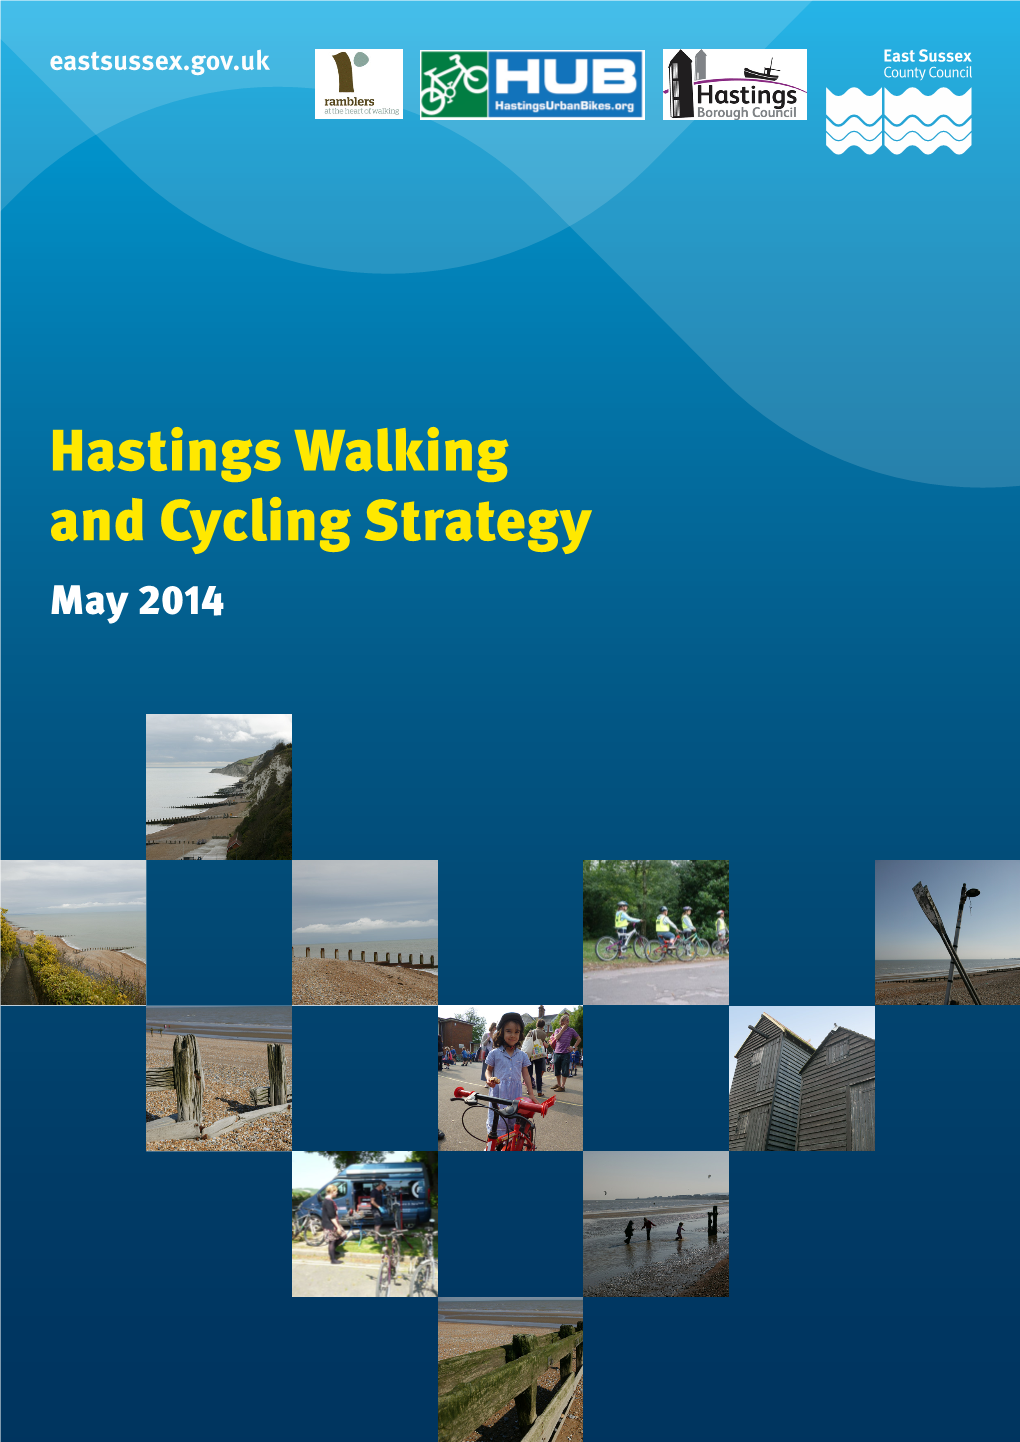 Hastings Walking and Cycling Strategy (May 2014)